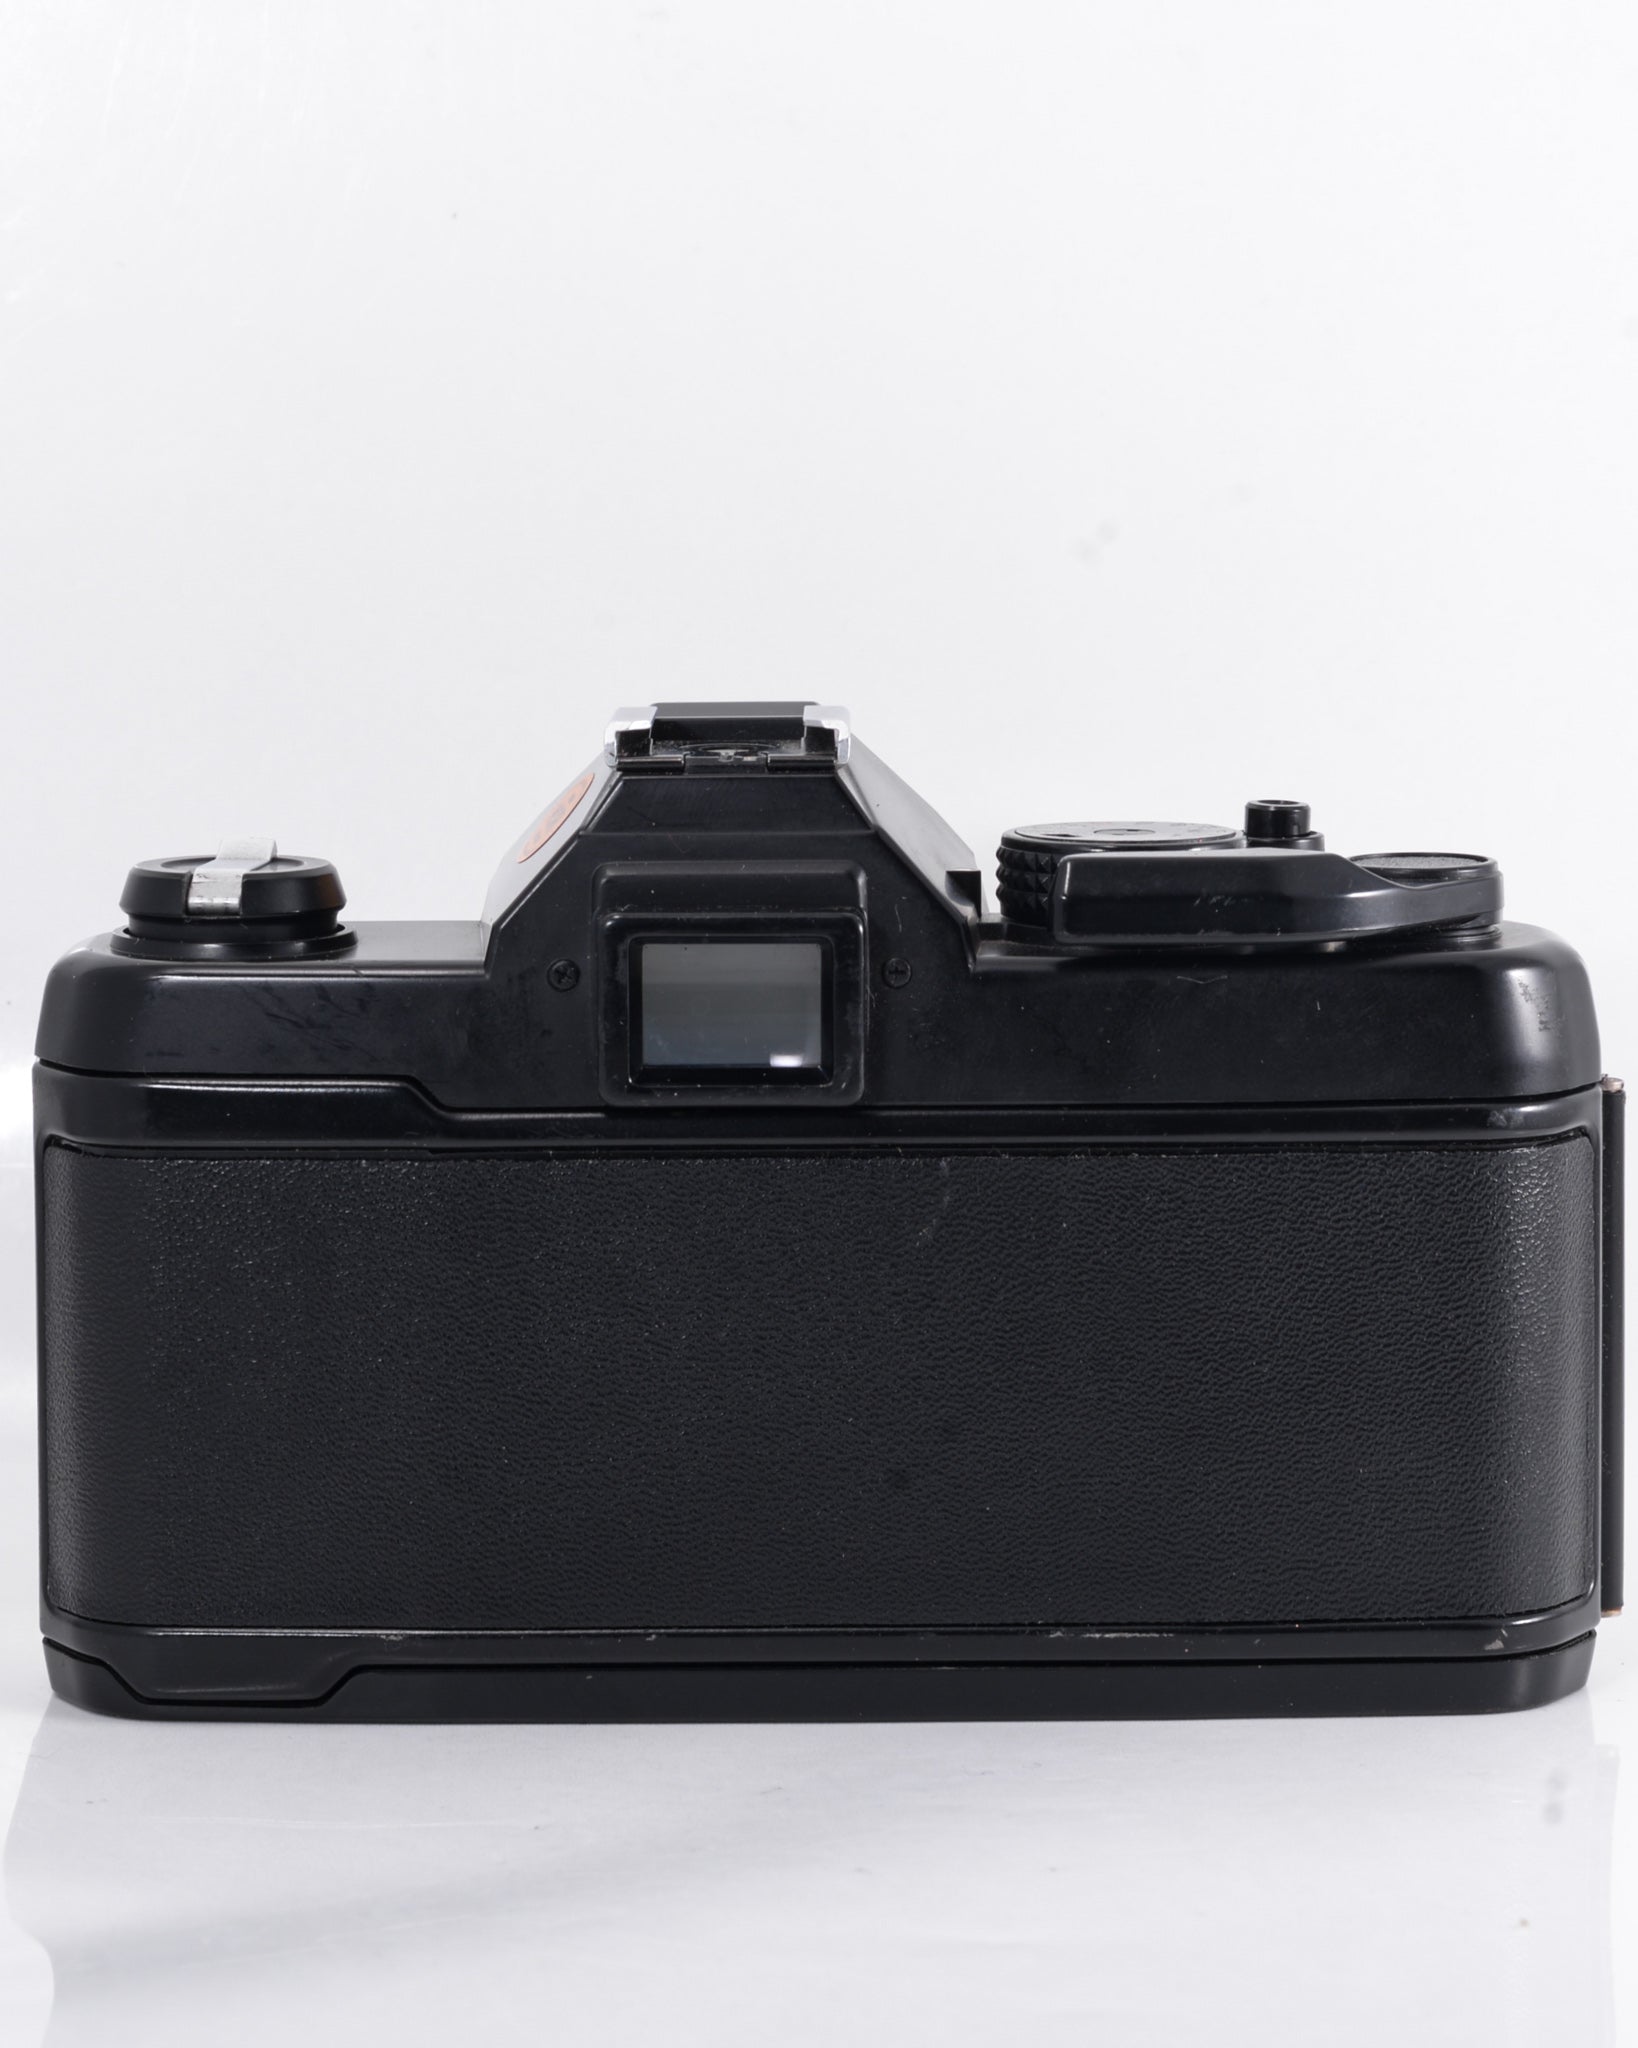 Yashica FX-3 Super 35mm SLR film camera with 50mm f2 lens